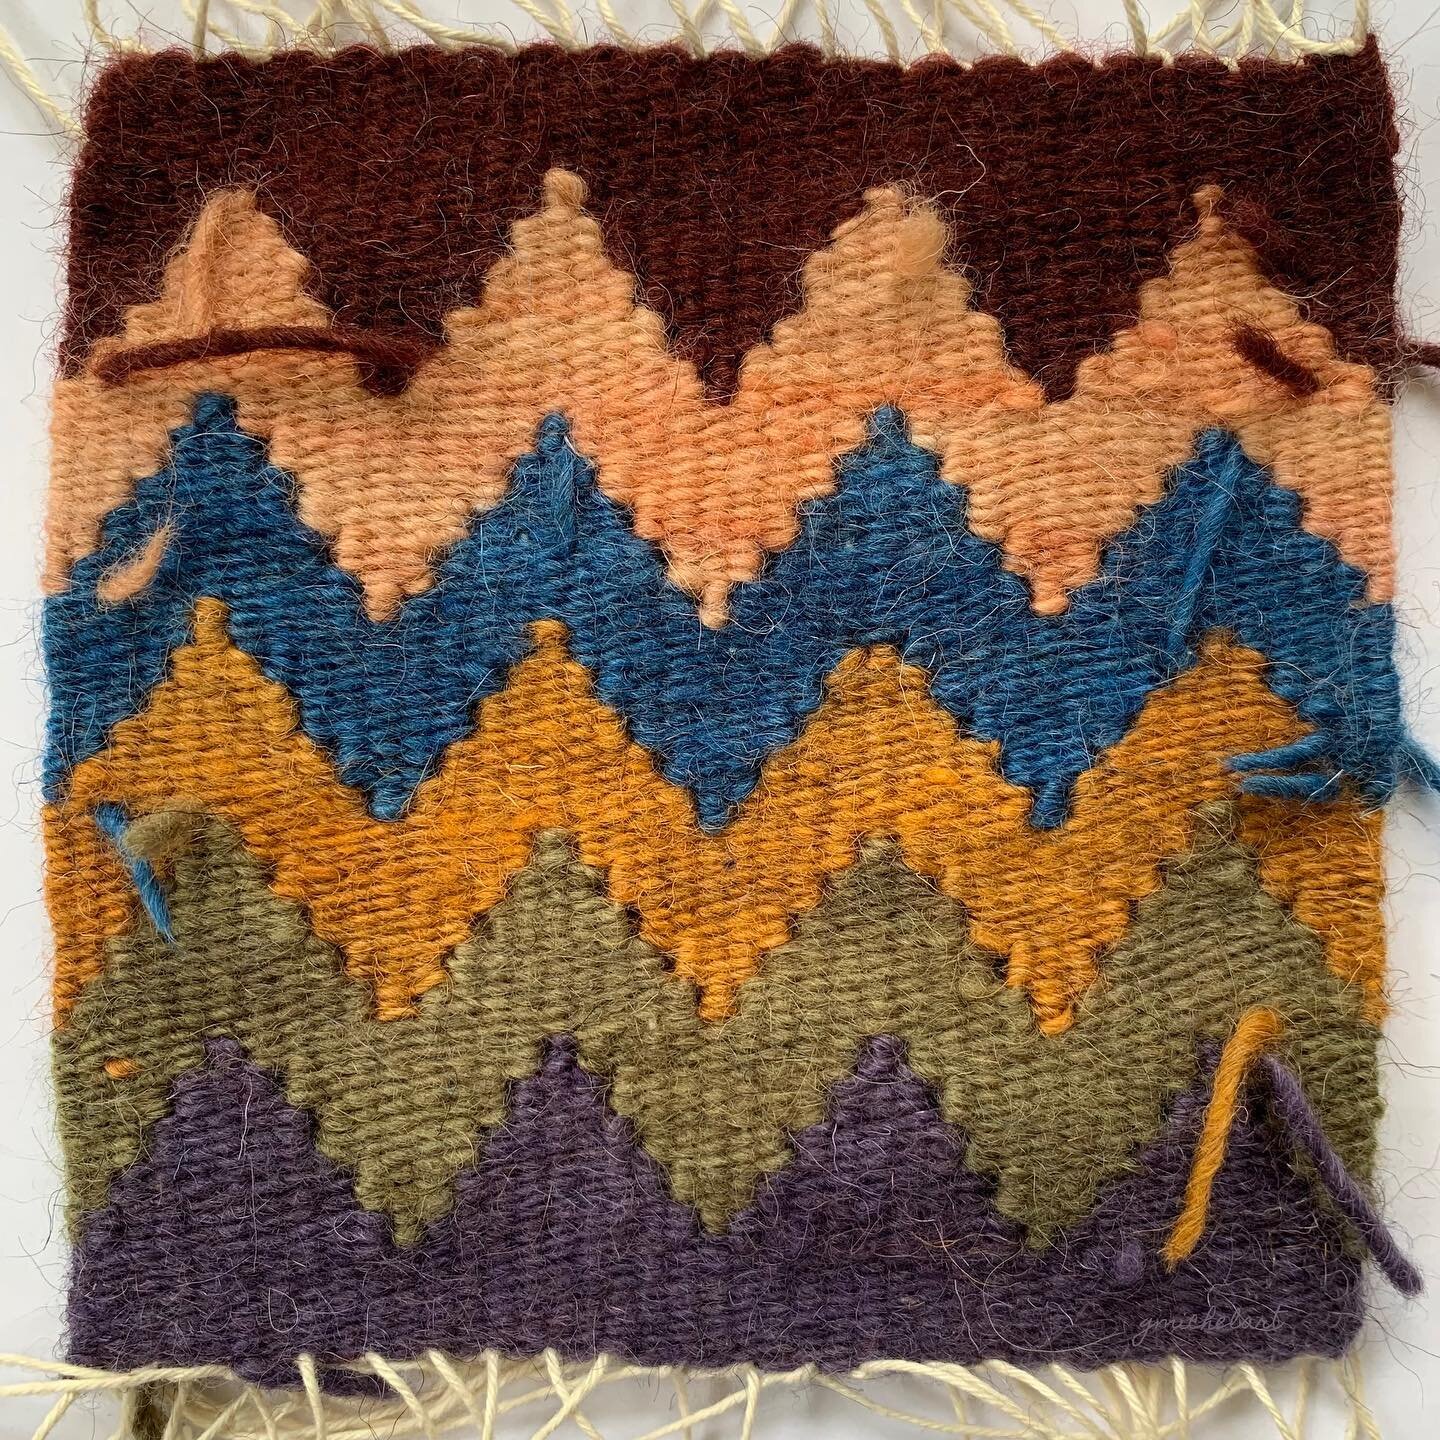 Tapestry newly off the the loom: Zigzag 5, churro wool weft yarn
.
.
.
.
.
.
.
.
#tapestryweaving #handweaving #fiberart #fiberarts #fibrearts #fibreart #fibreartist #textileart #yarnlove #weaving #tapestryart #tapestryweaversofinstagram #weaversofin